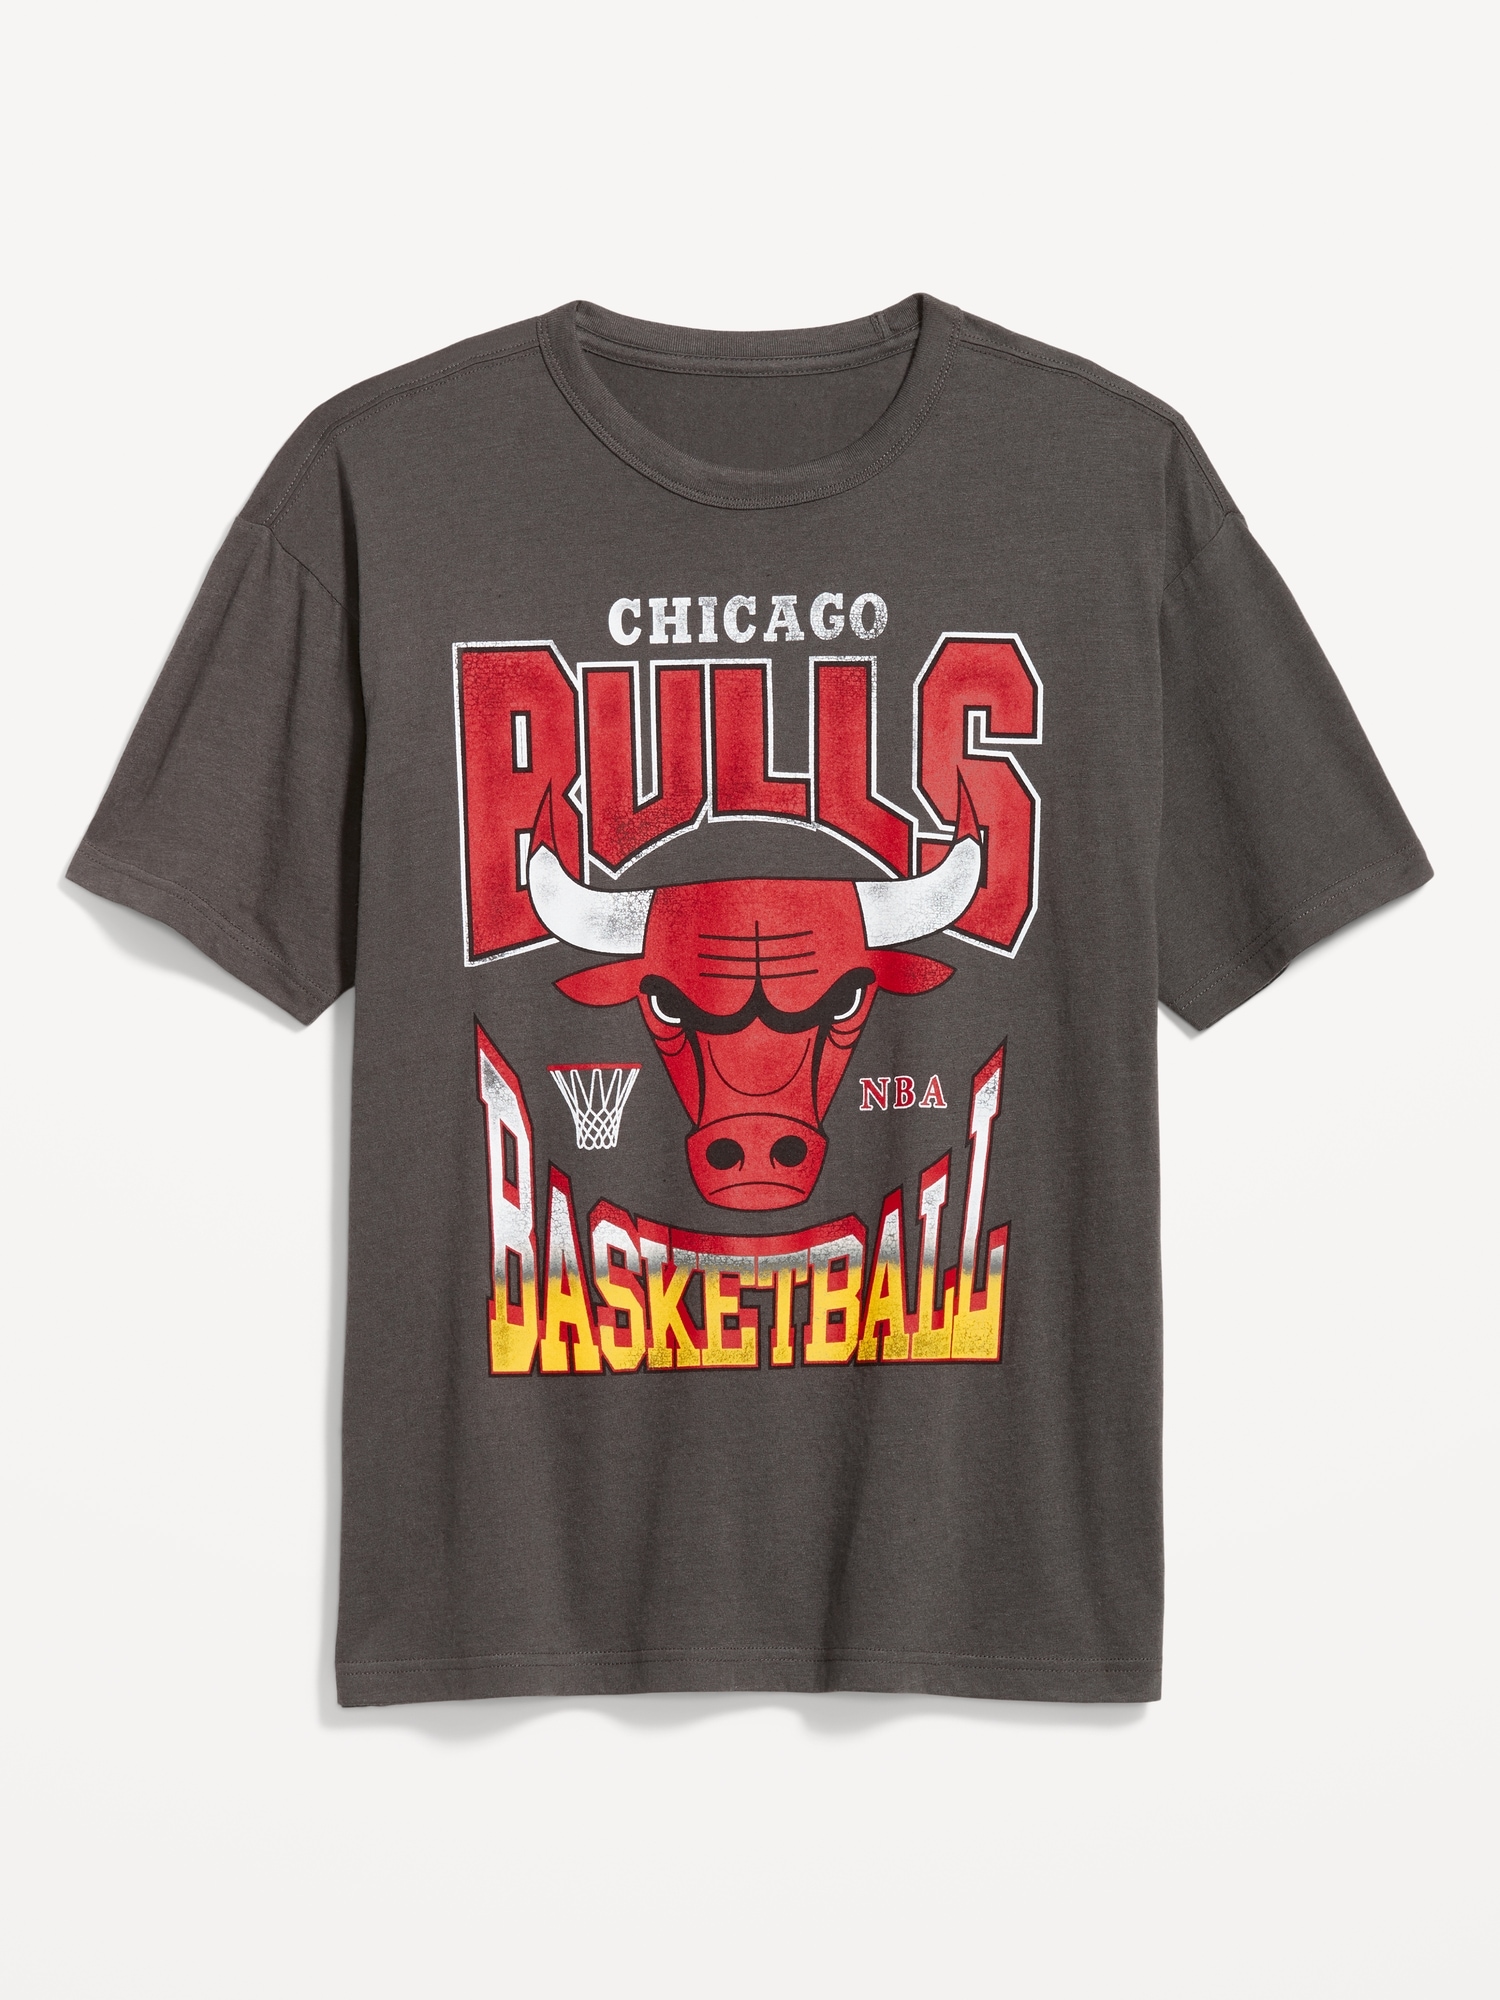 Big Boys Big Kids (XS - XL) Chicago Bulls Clothing.